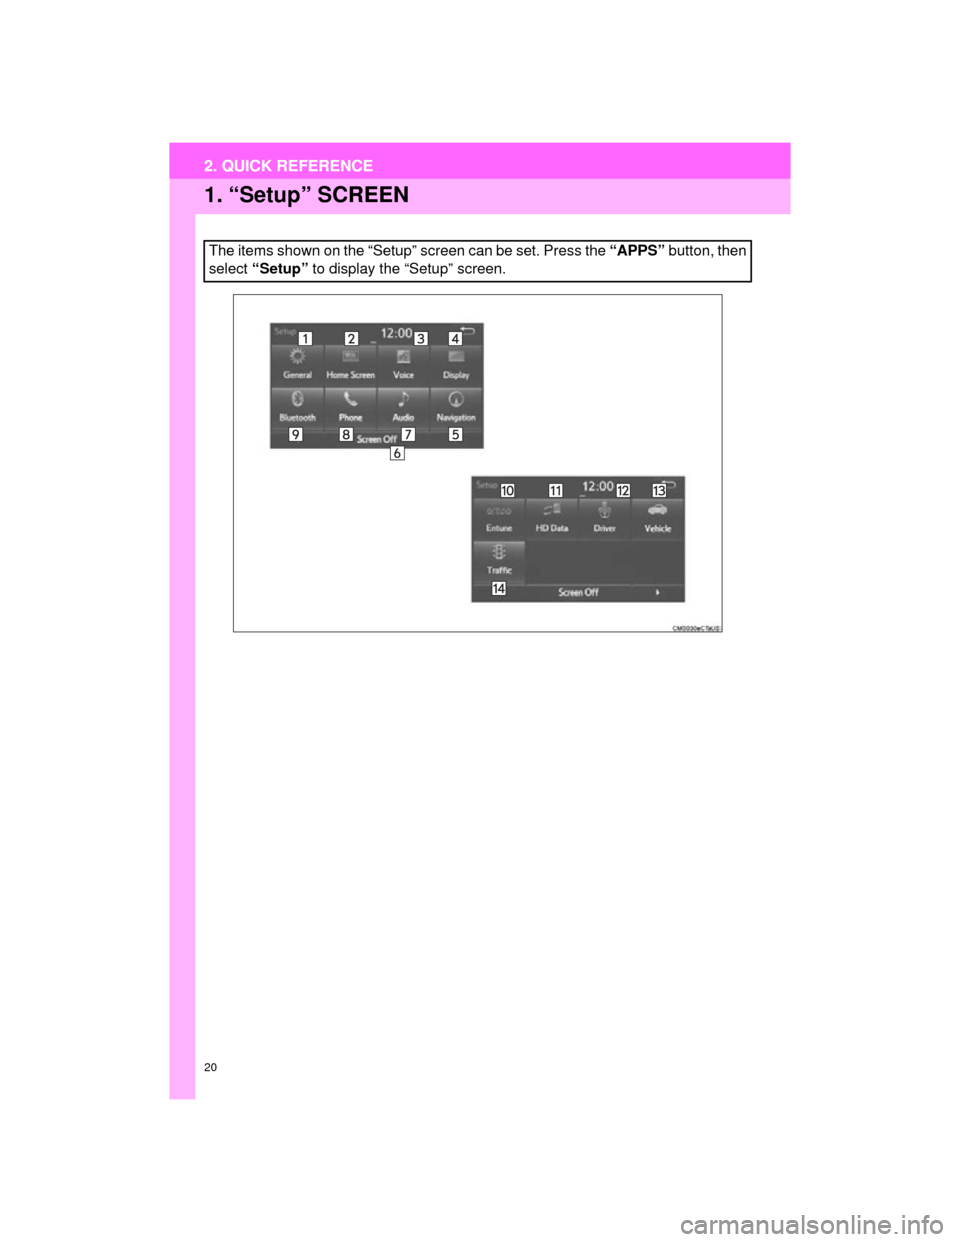 TOYOTA CAMRY 2015 XV50 / 9.G Navigation Manual 20
2. QUICK REFERENCE
Camry_Navi_U
1. “Setup” SCREEN
The items shown on the “Setup” screen can be set. Press the “APPS” button, then
select  “Setup”  to display the “Setup” screen.